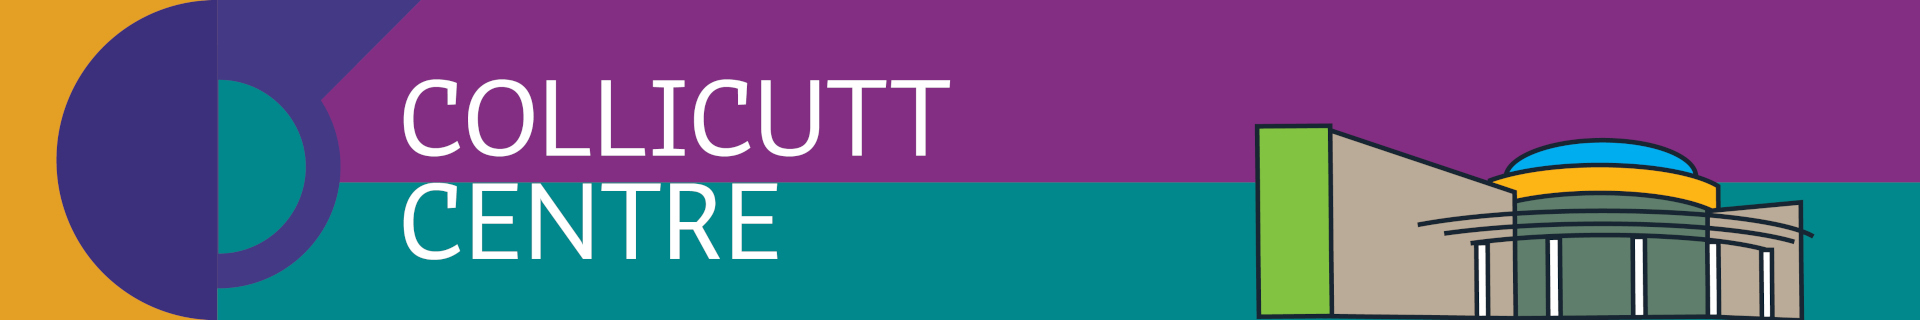 Collicutt Centre Banner Image